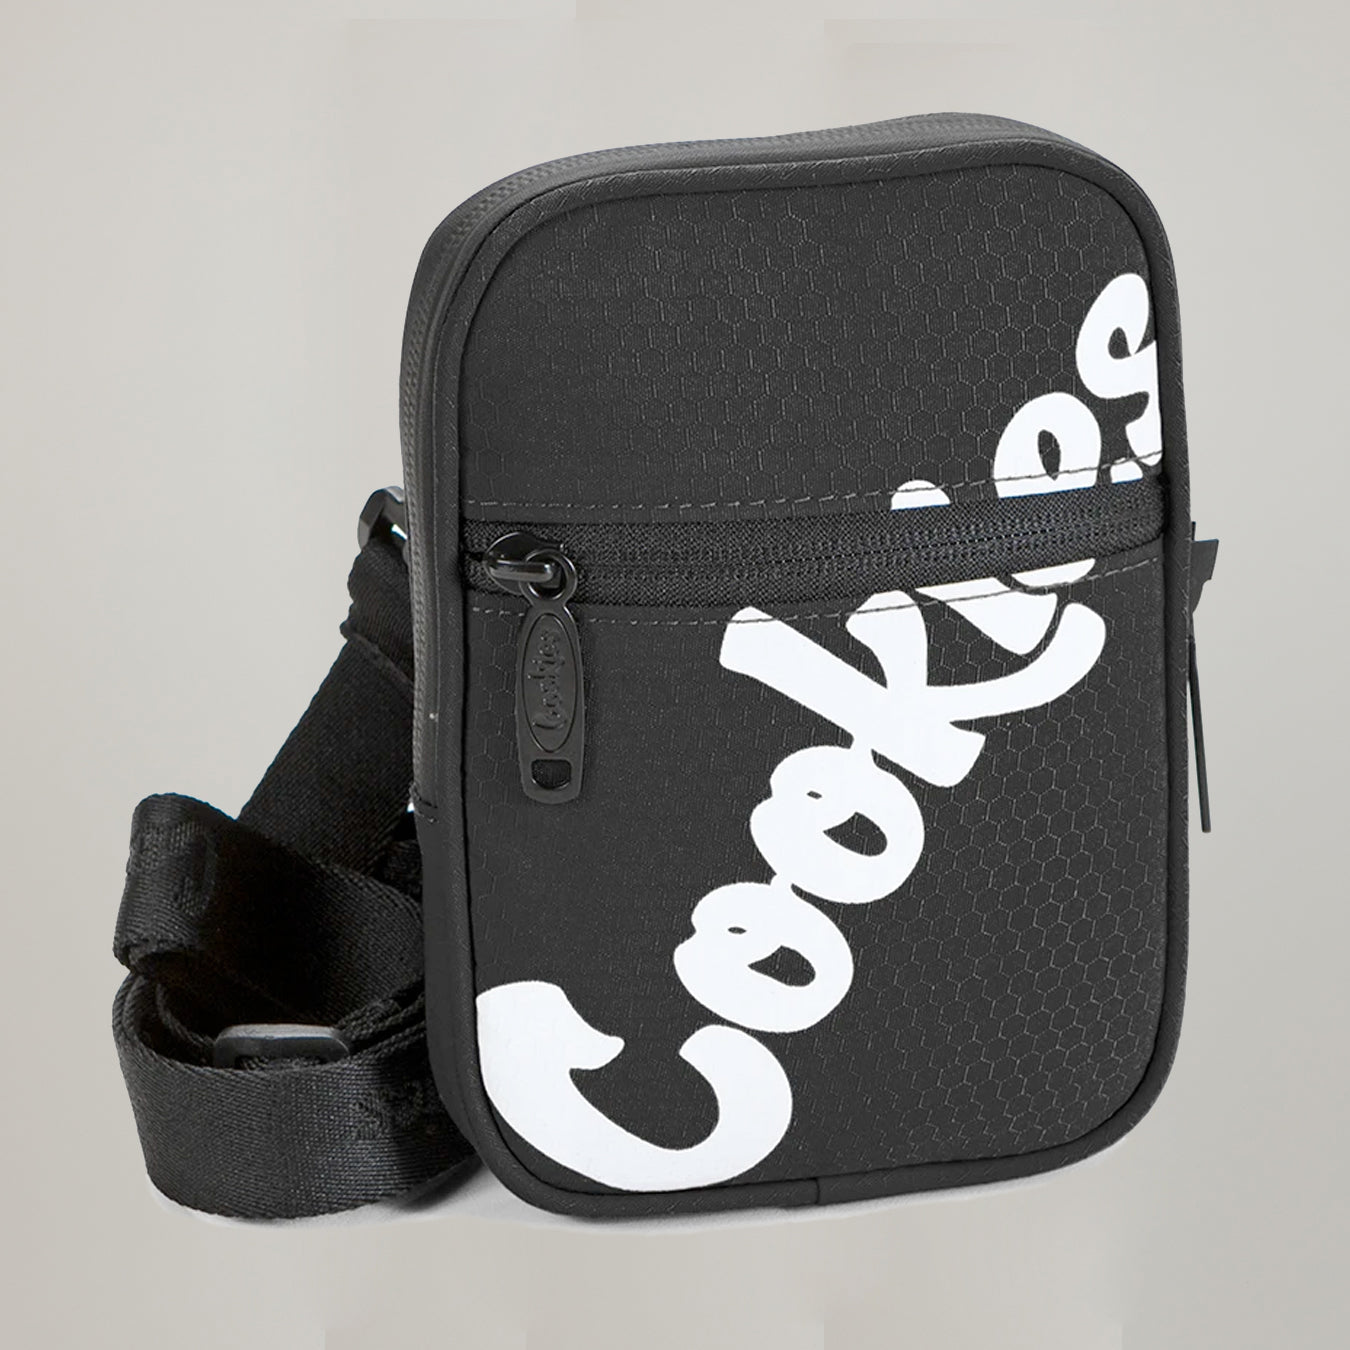 Cookies Accessories, Cookies Smell Proof Backpack